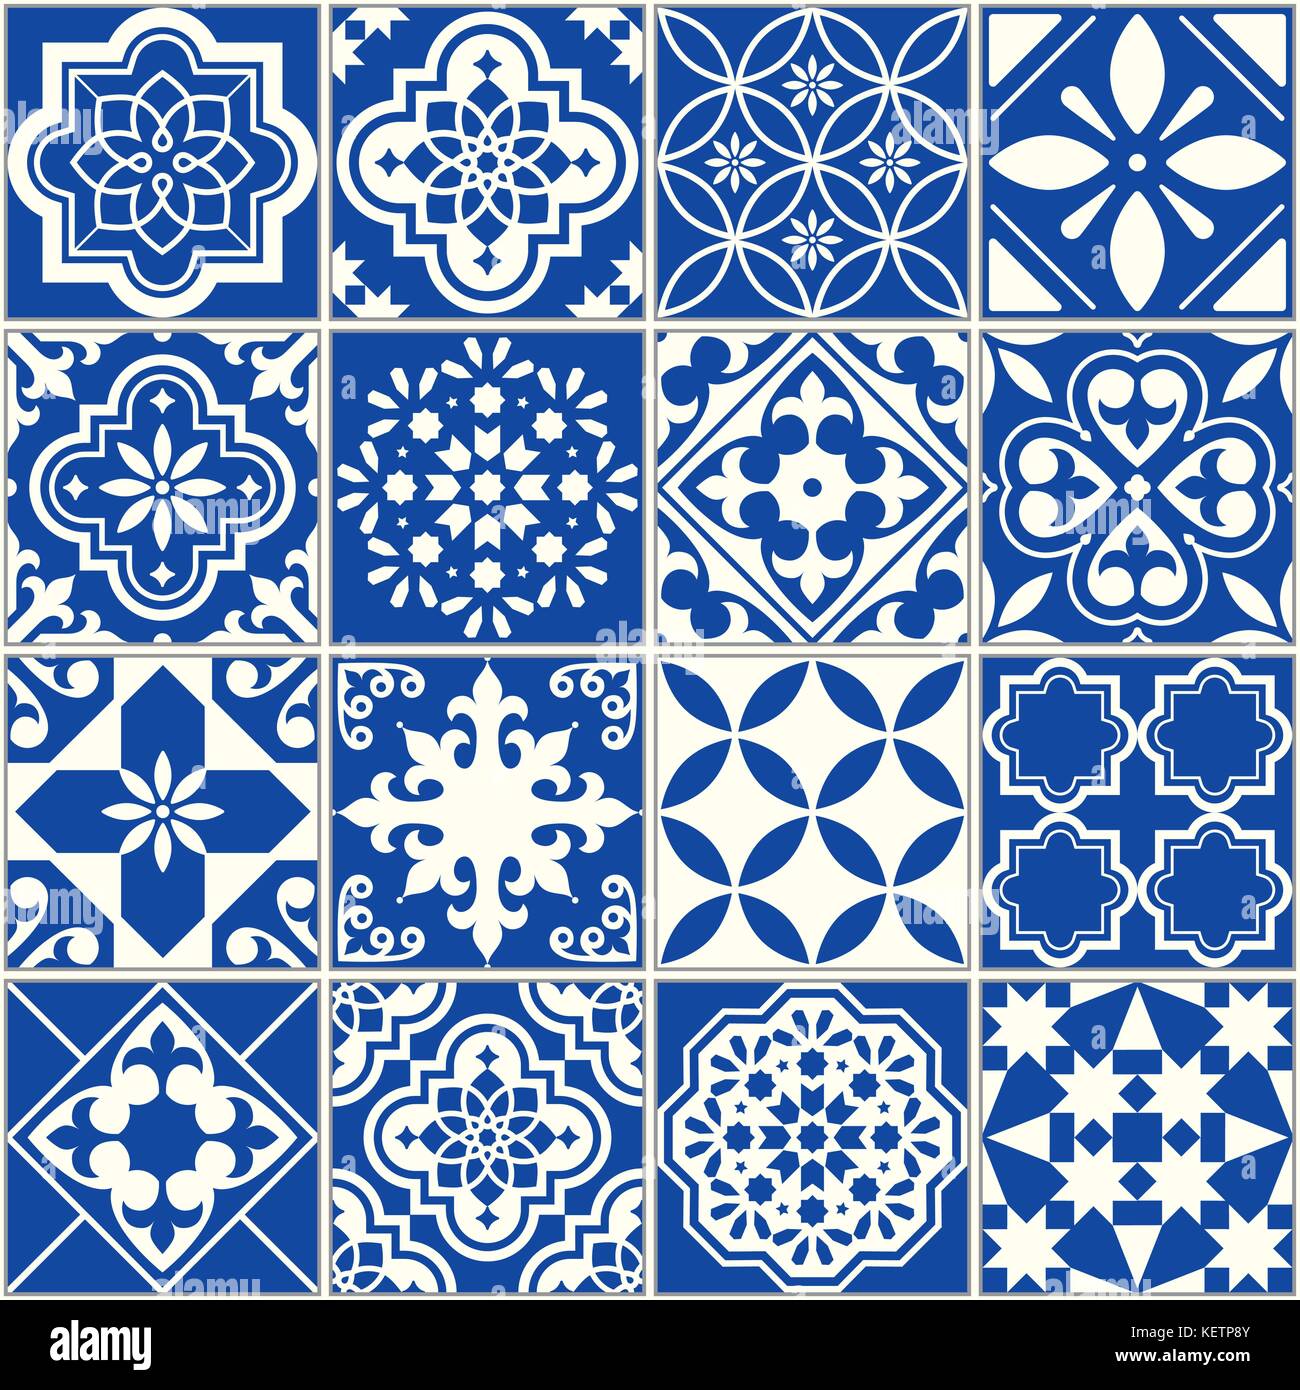 Spanisch oder Portugiesisch vektor Fliese Muster, Lissabon floral Mosaik, mediterranen Nahtlose navy blue Ornament Stock Vektor